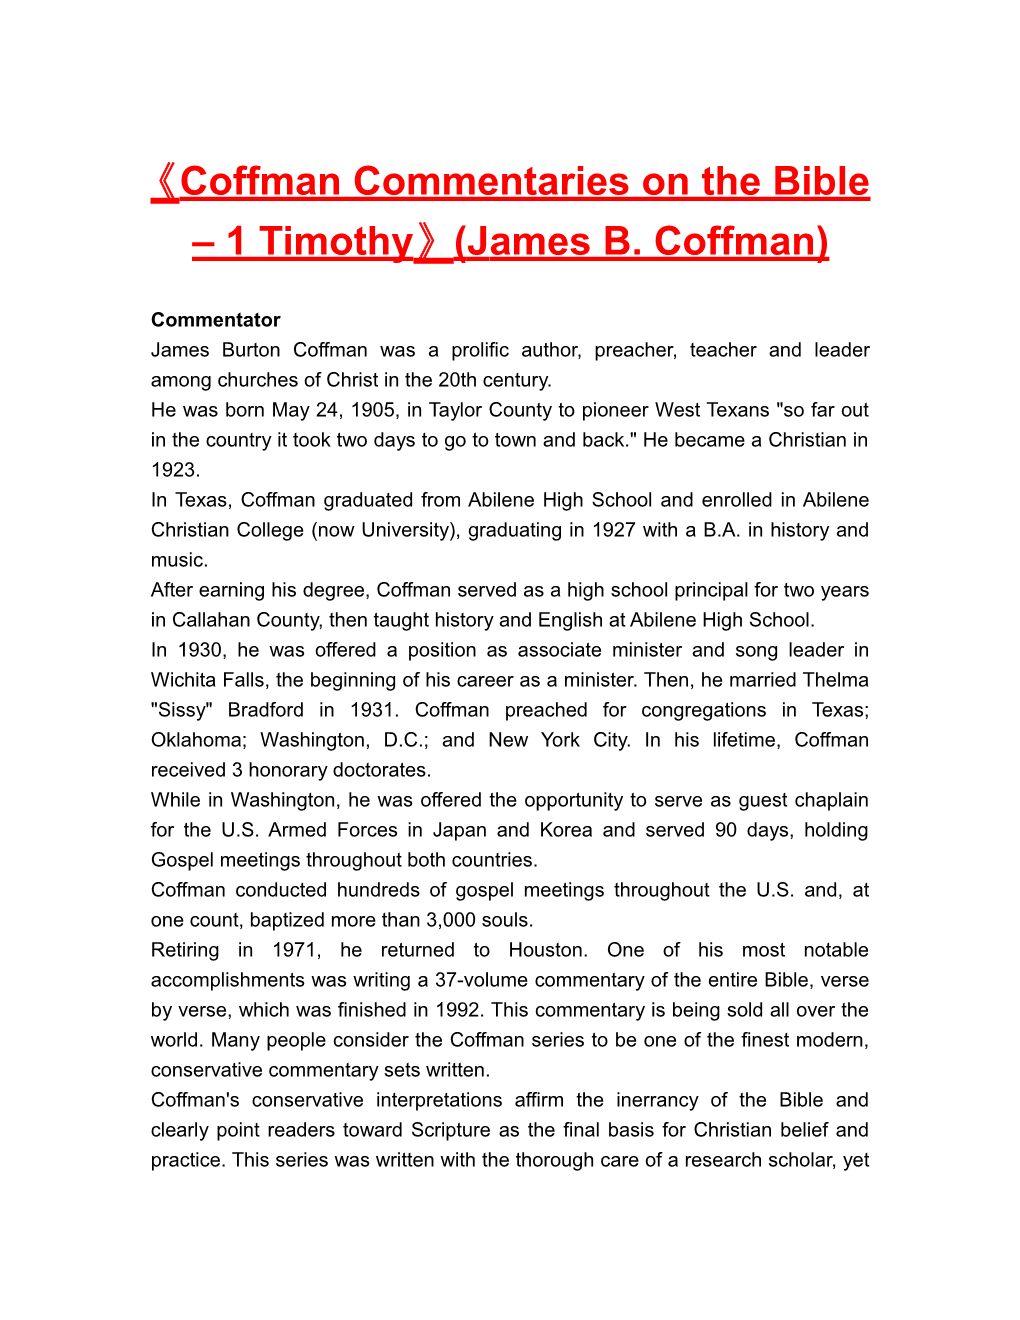 Coffman Commentaries on the Bible 1 Timothy (James B. Coffman)